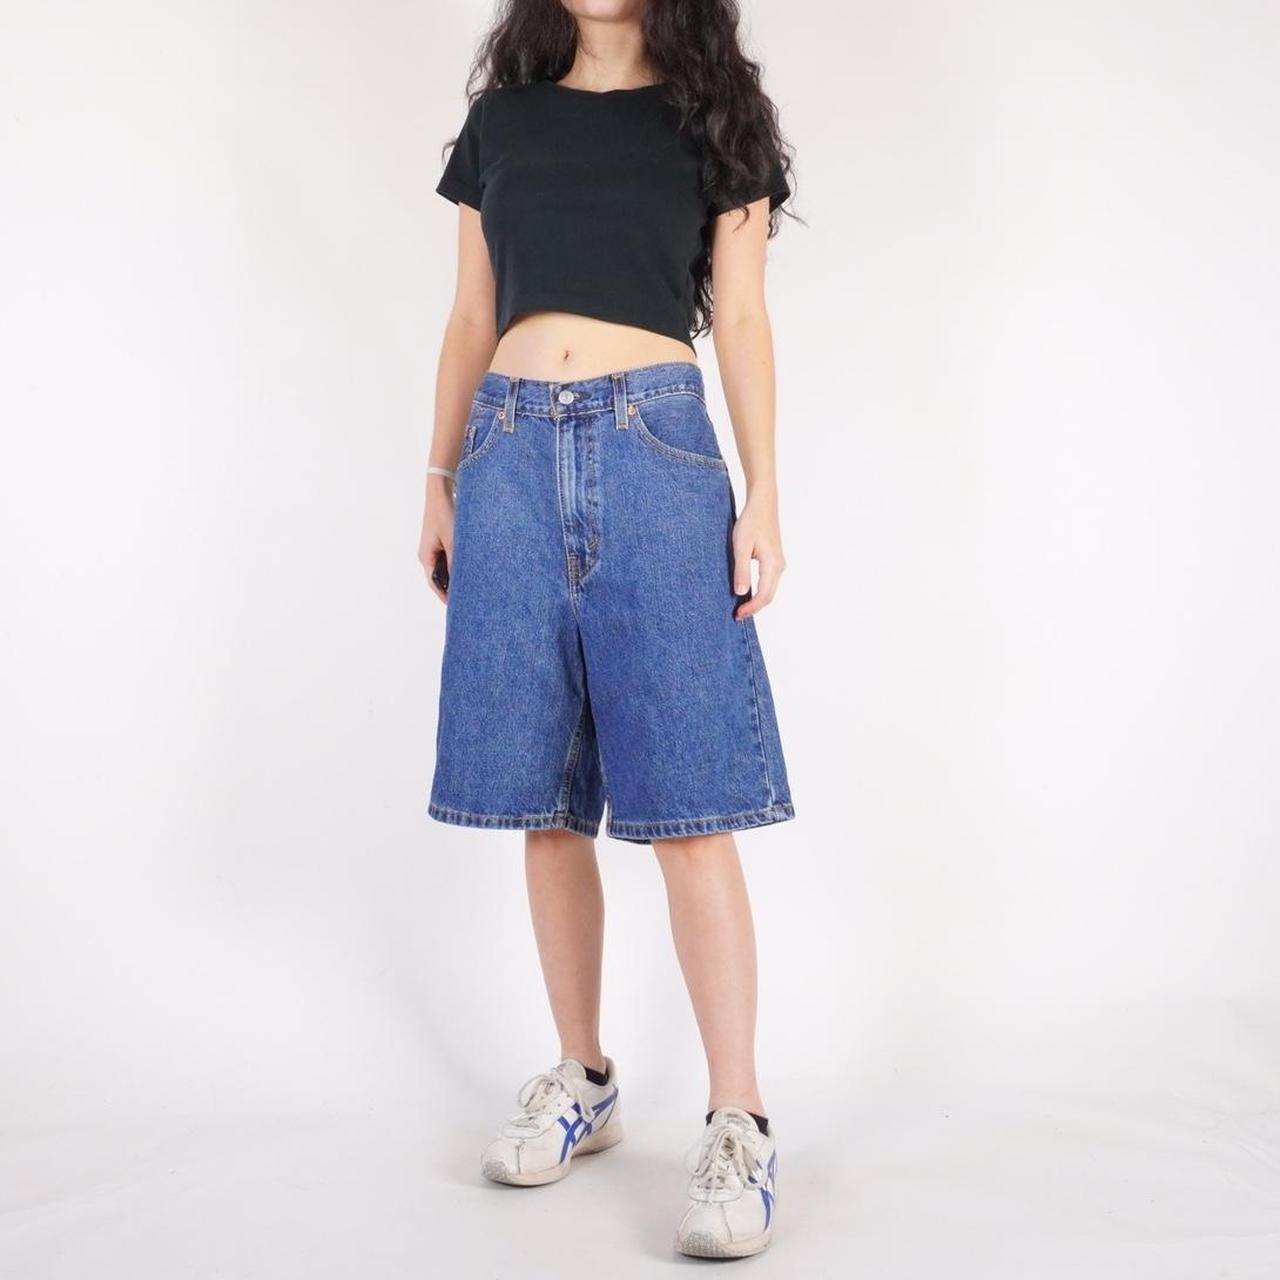 blue denim shorts / jorts Brand: levis, cotton Size... - Depop